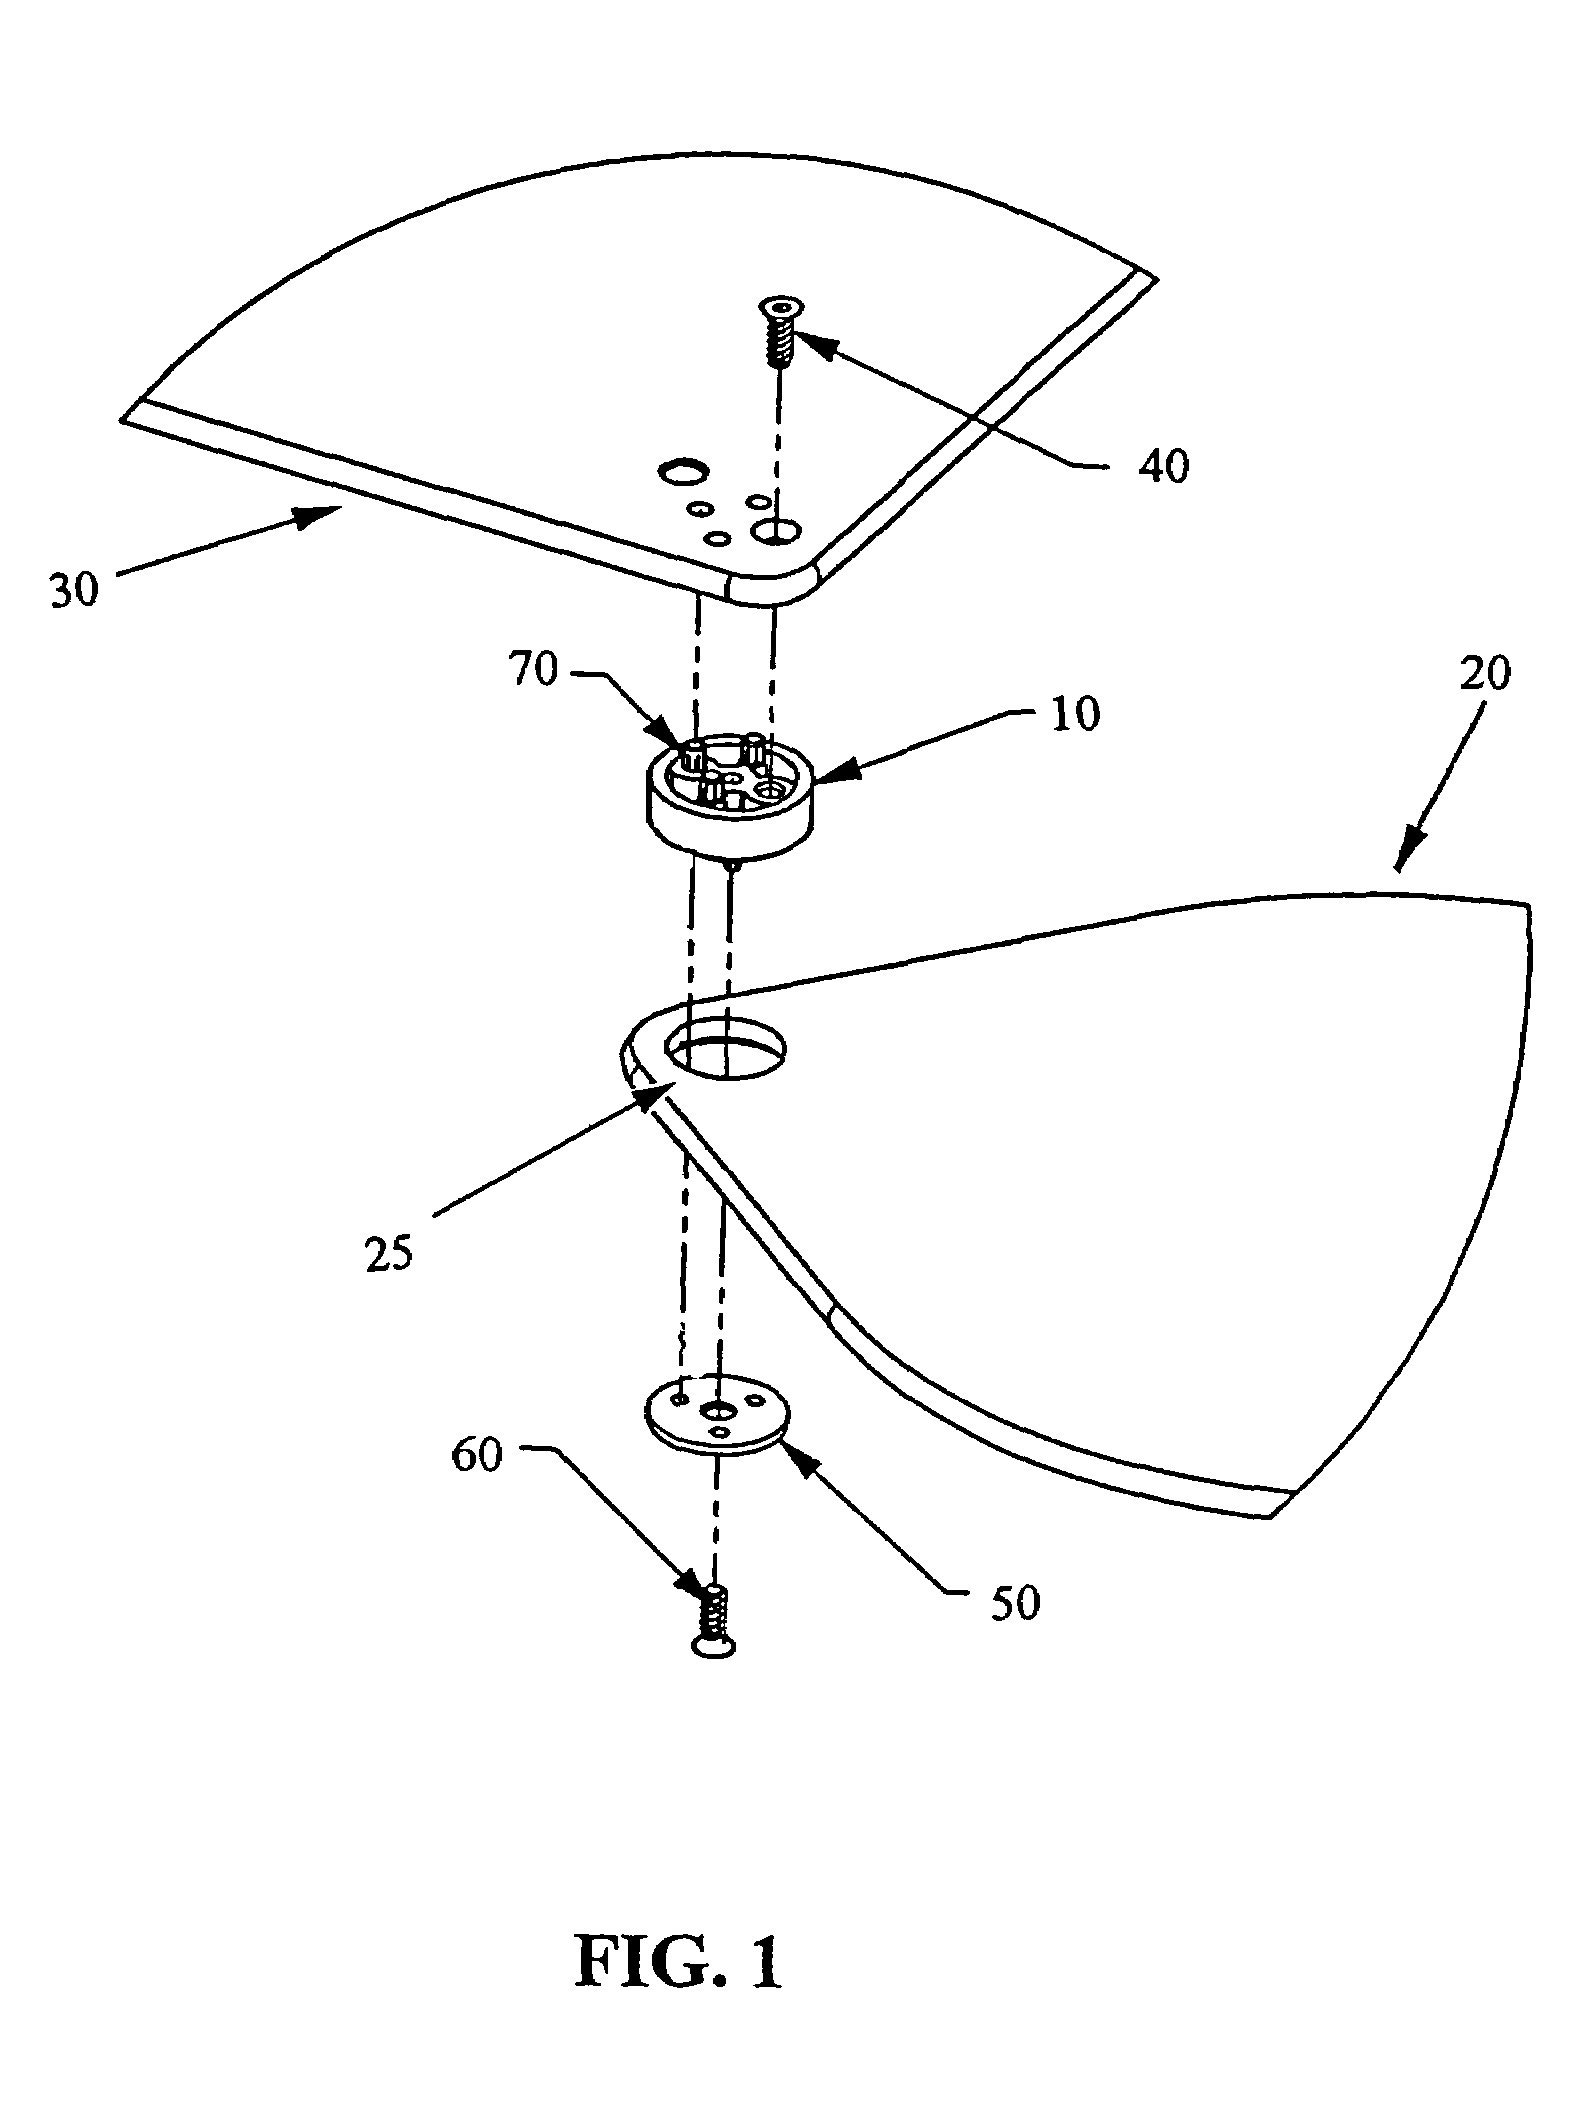 Accessory shelf mounting mechanism